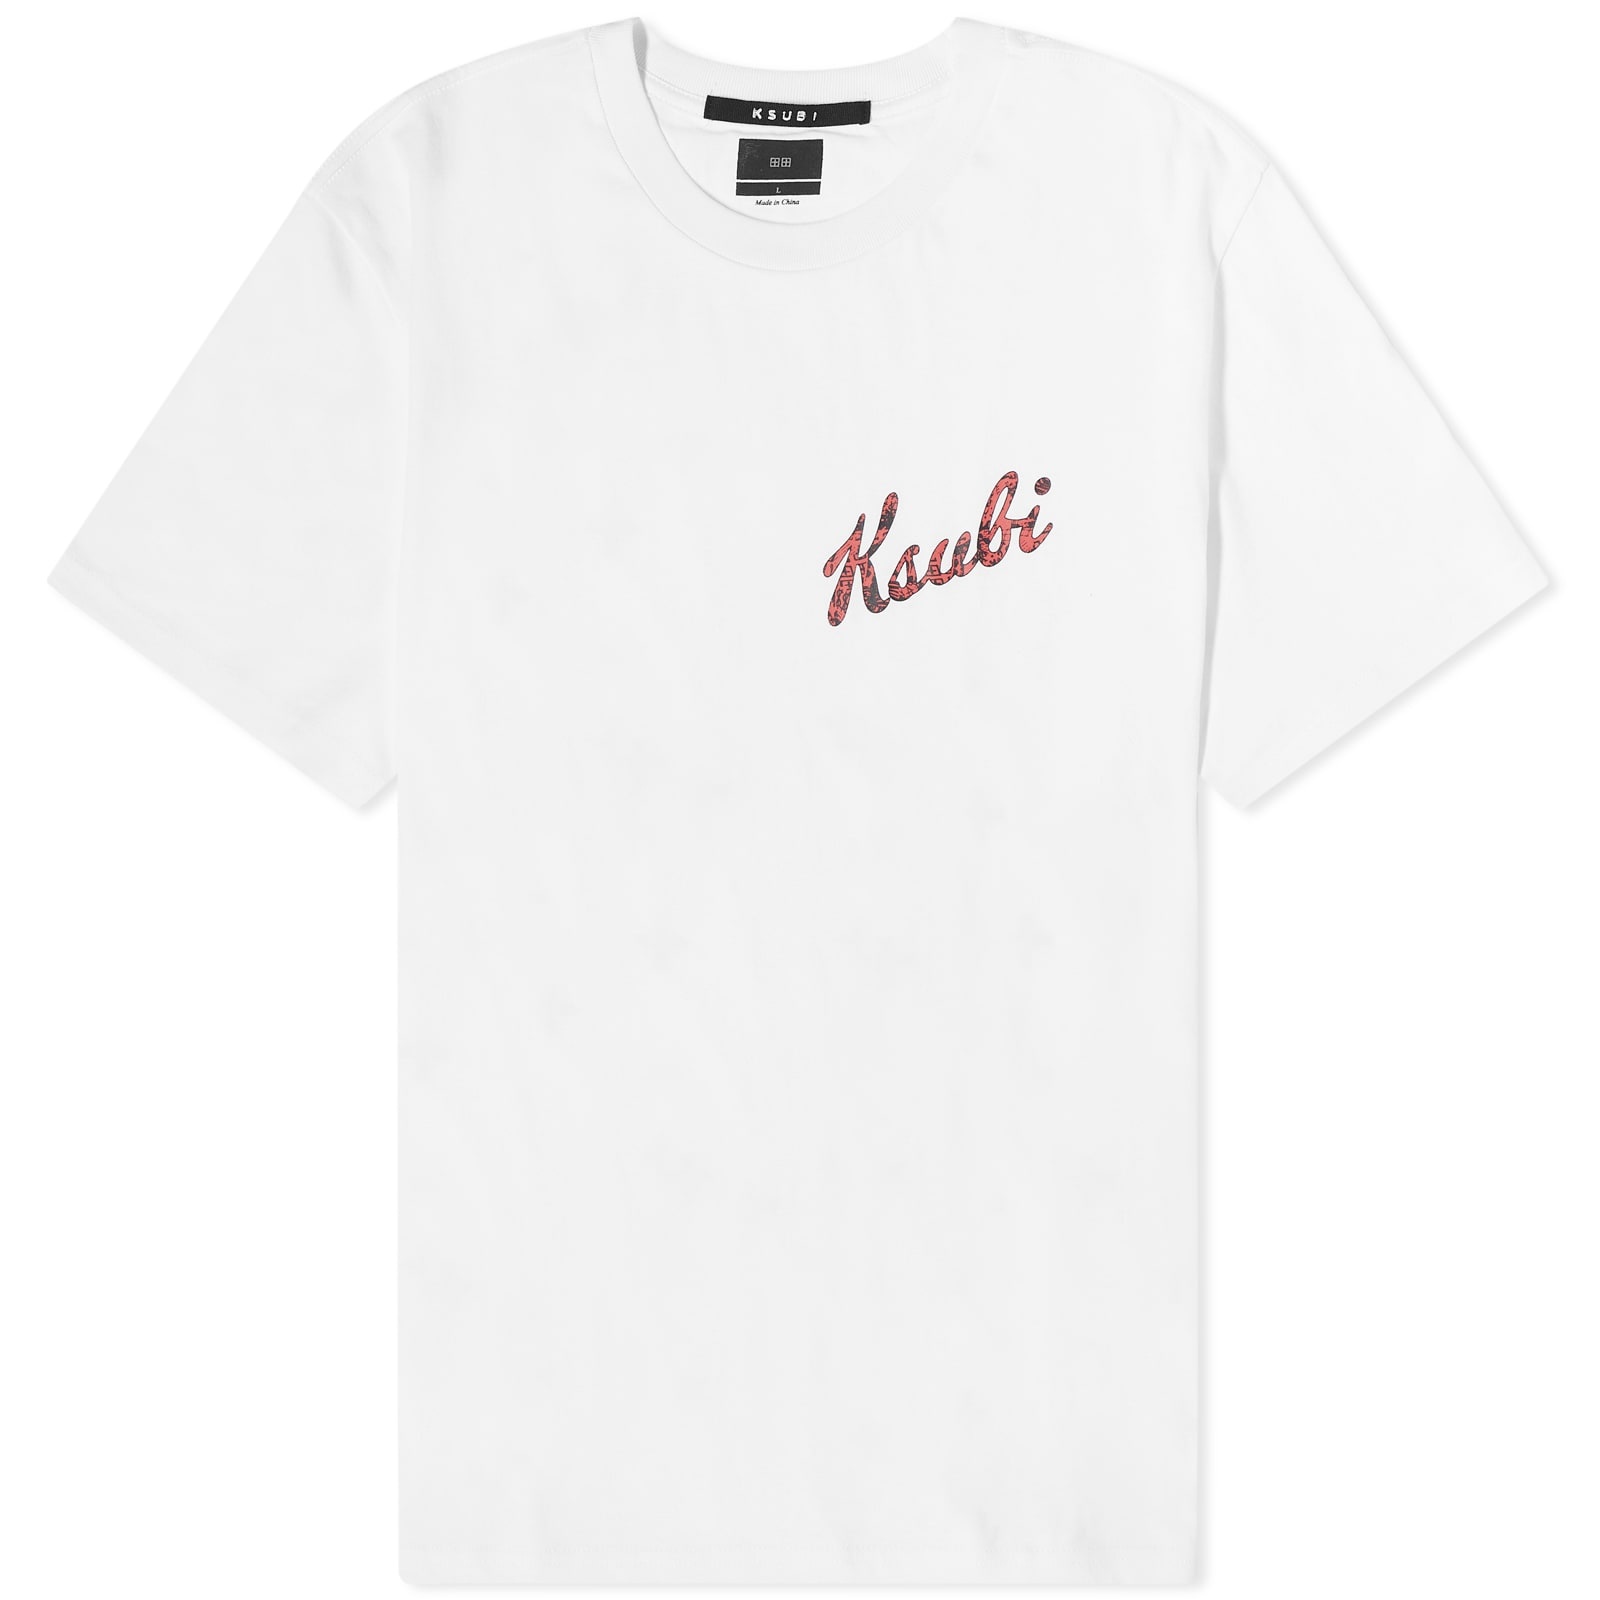 Ksubi Autograph Kash T-Shirt - 1